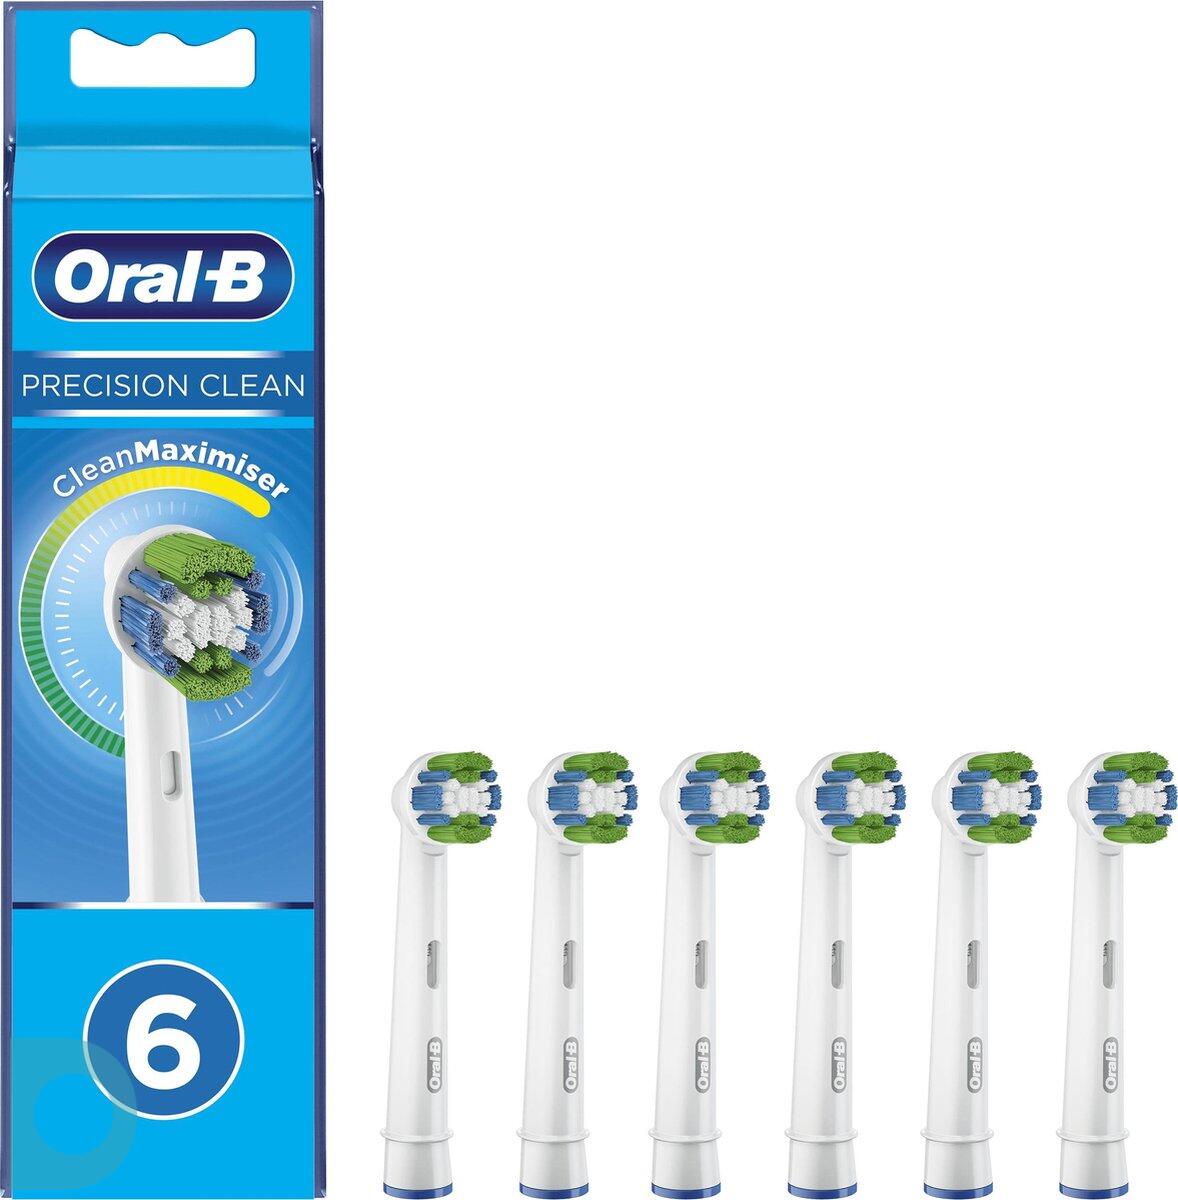 Monnik Rechtzetten bovenstaand Oral-B Precision Clean Oral-B Opzetborstel Mega Deal Pack kopen bij De Onli